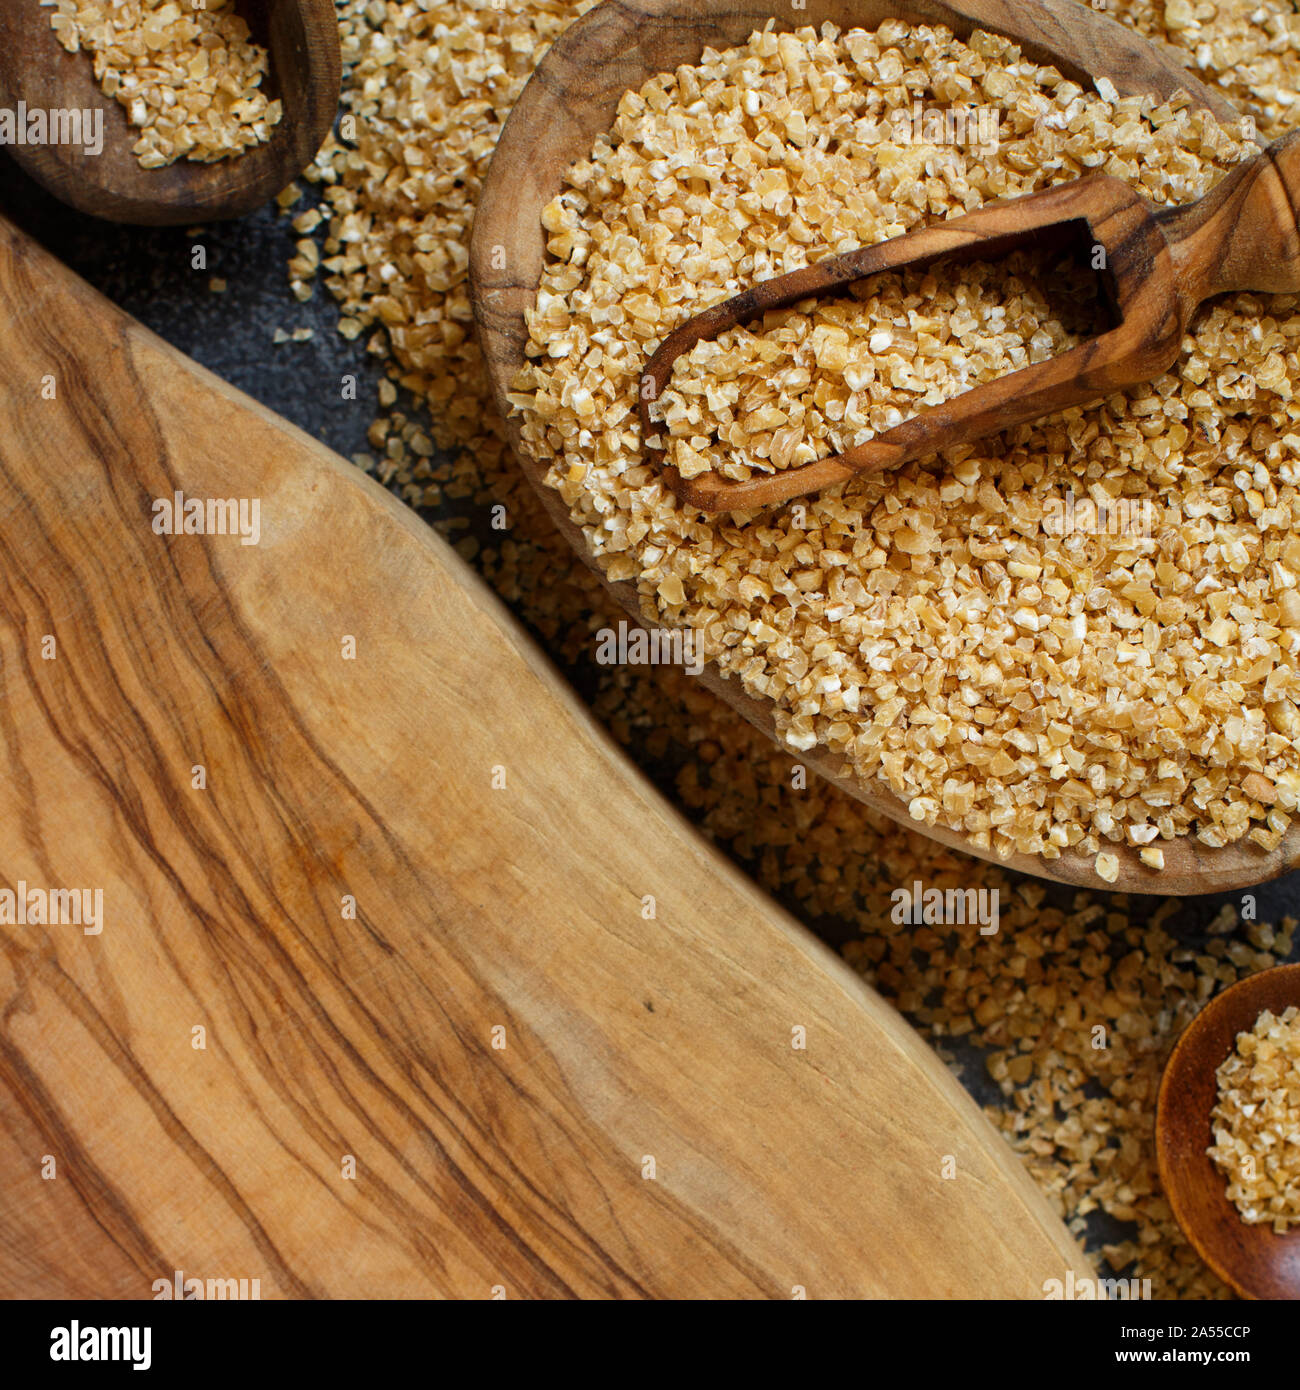 Dry bulgur wheat grains in bowls close up Stock Photo